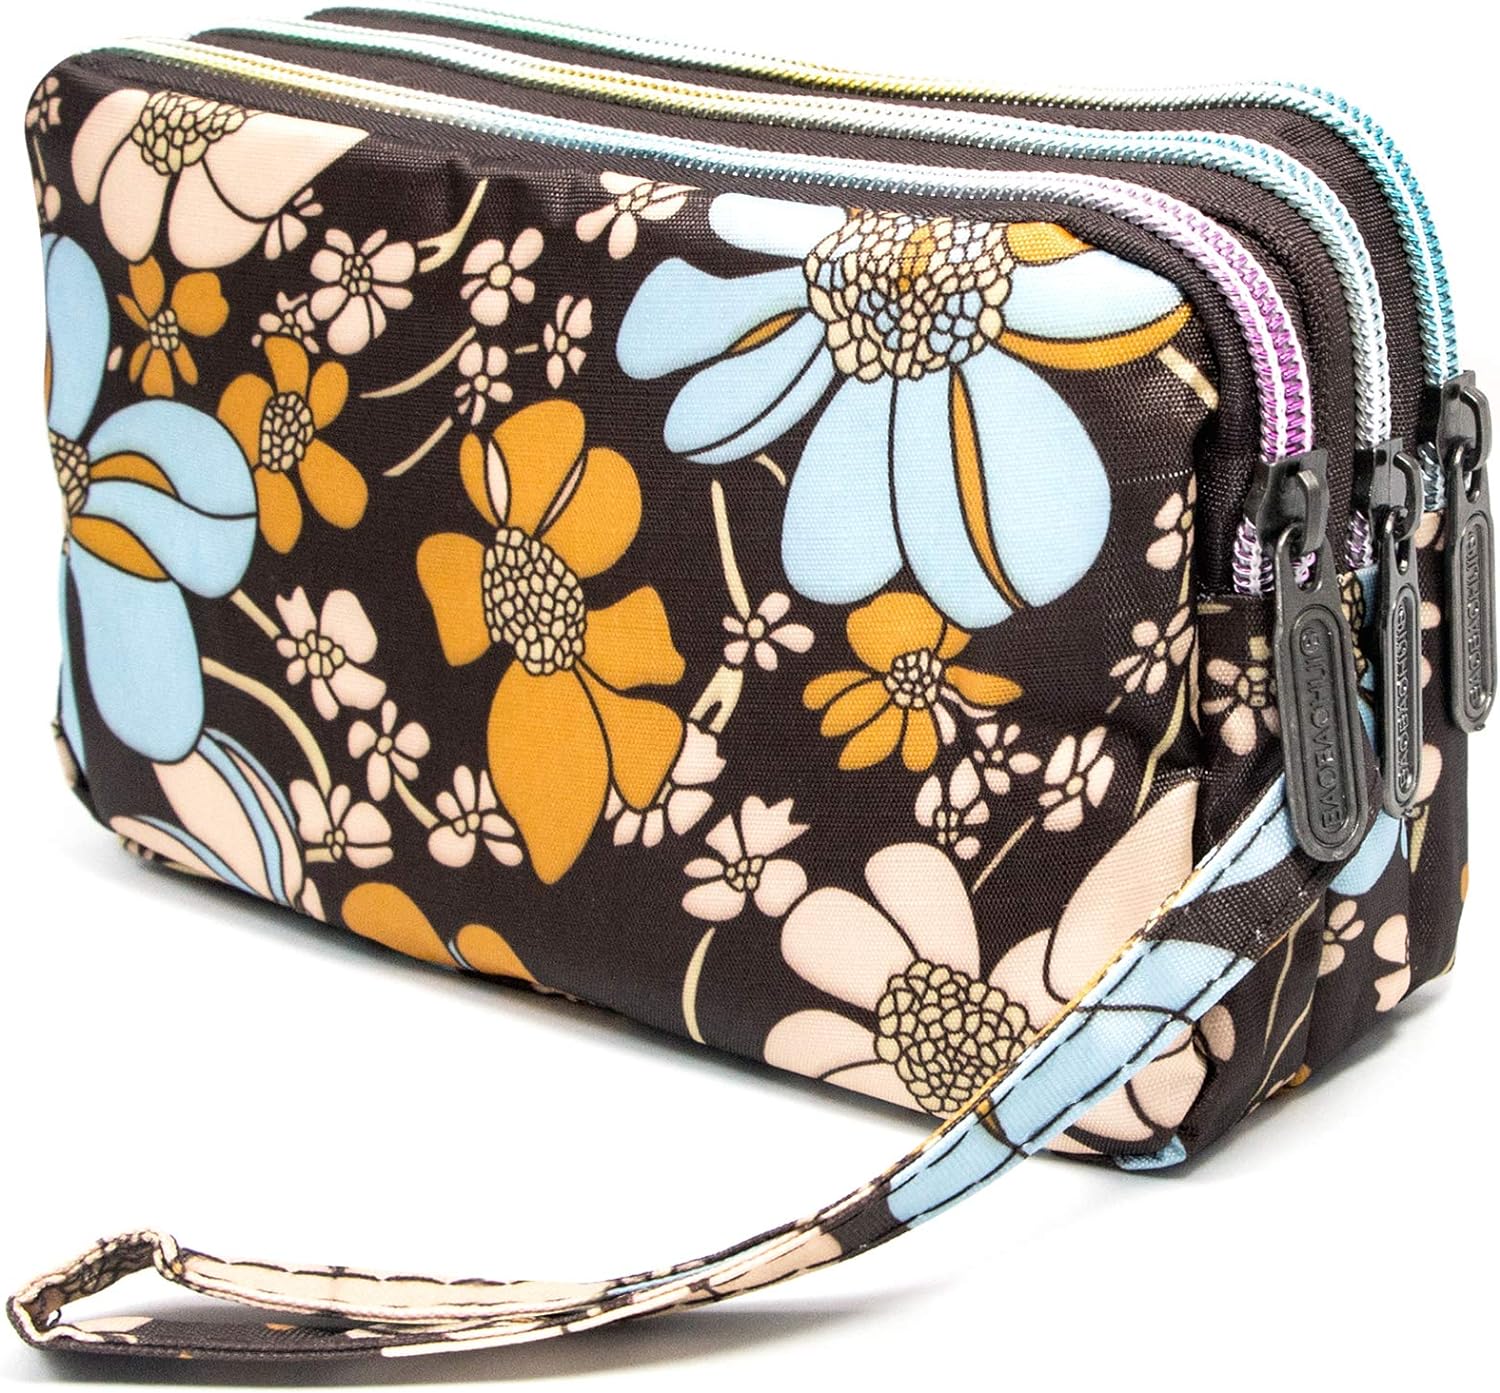 BIAOTIE Large Capacity Wristlet Wallet – Women Printed Nylon Waterproof Handbag Clutch Purse